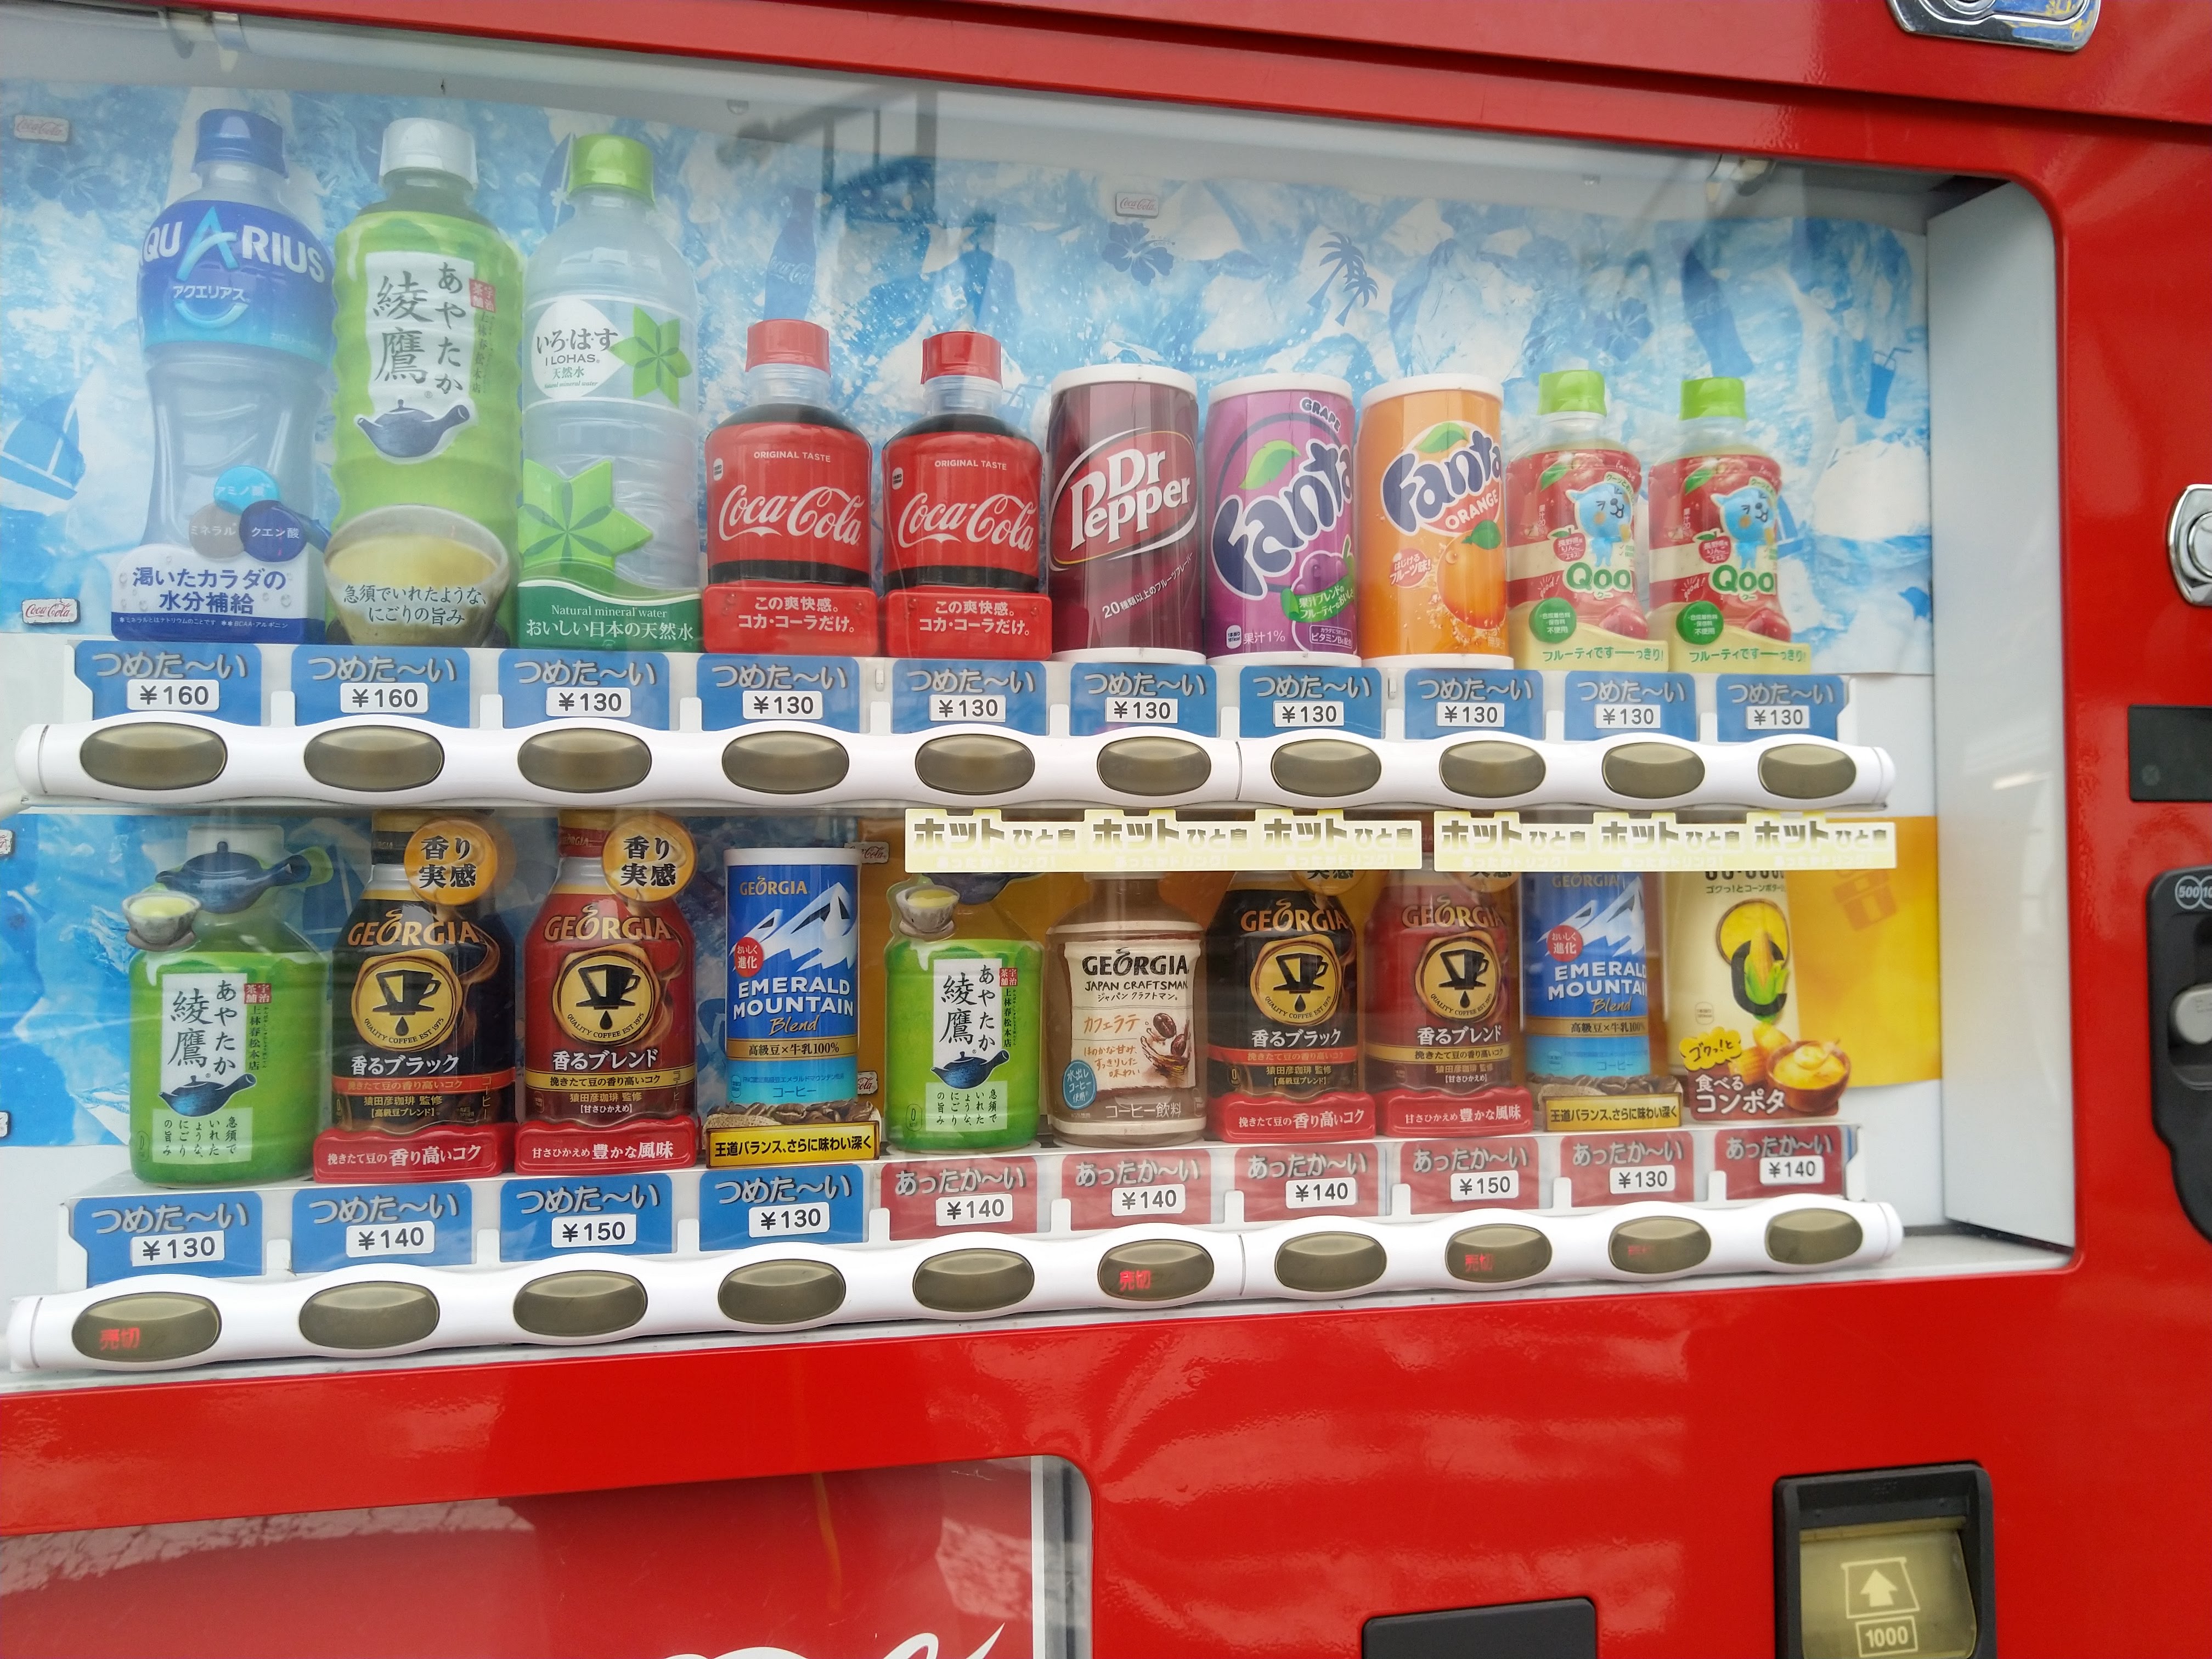 Coca-Cola vending machine